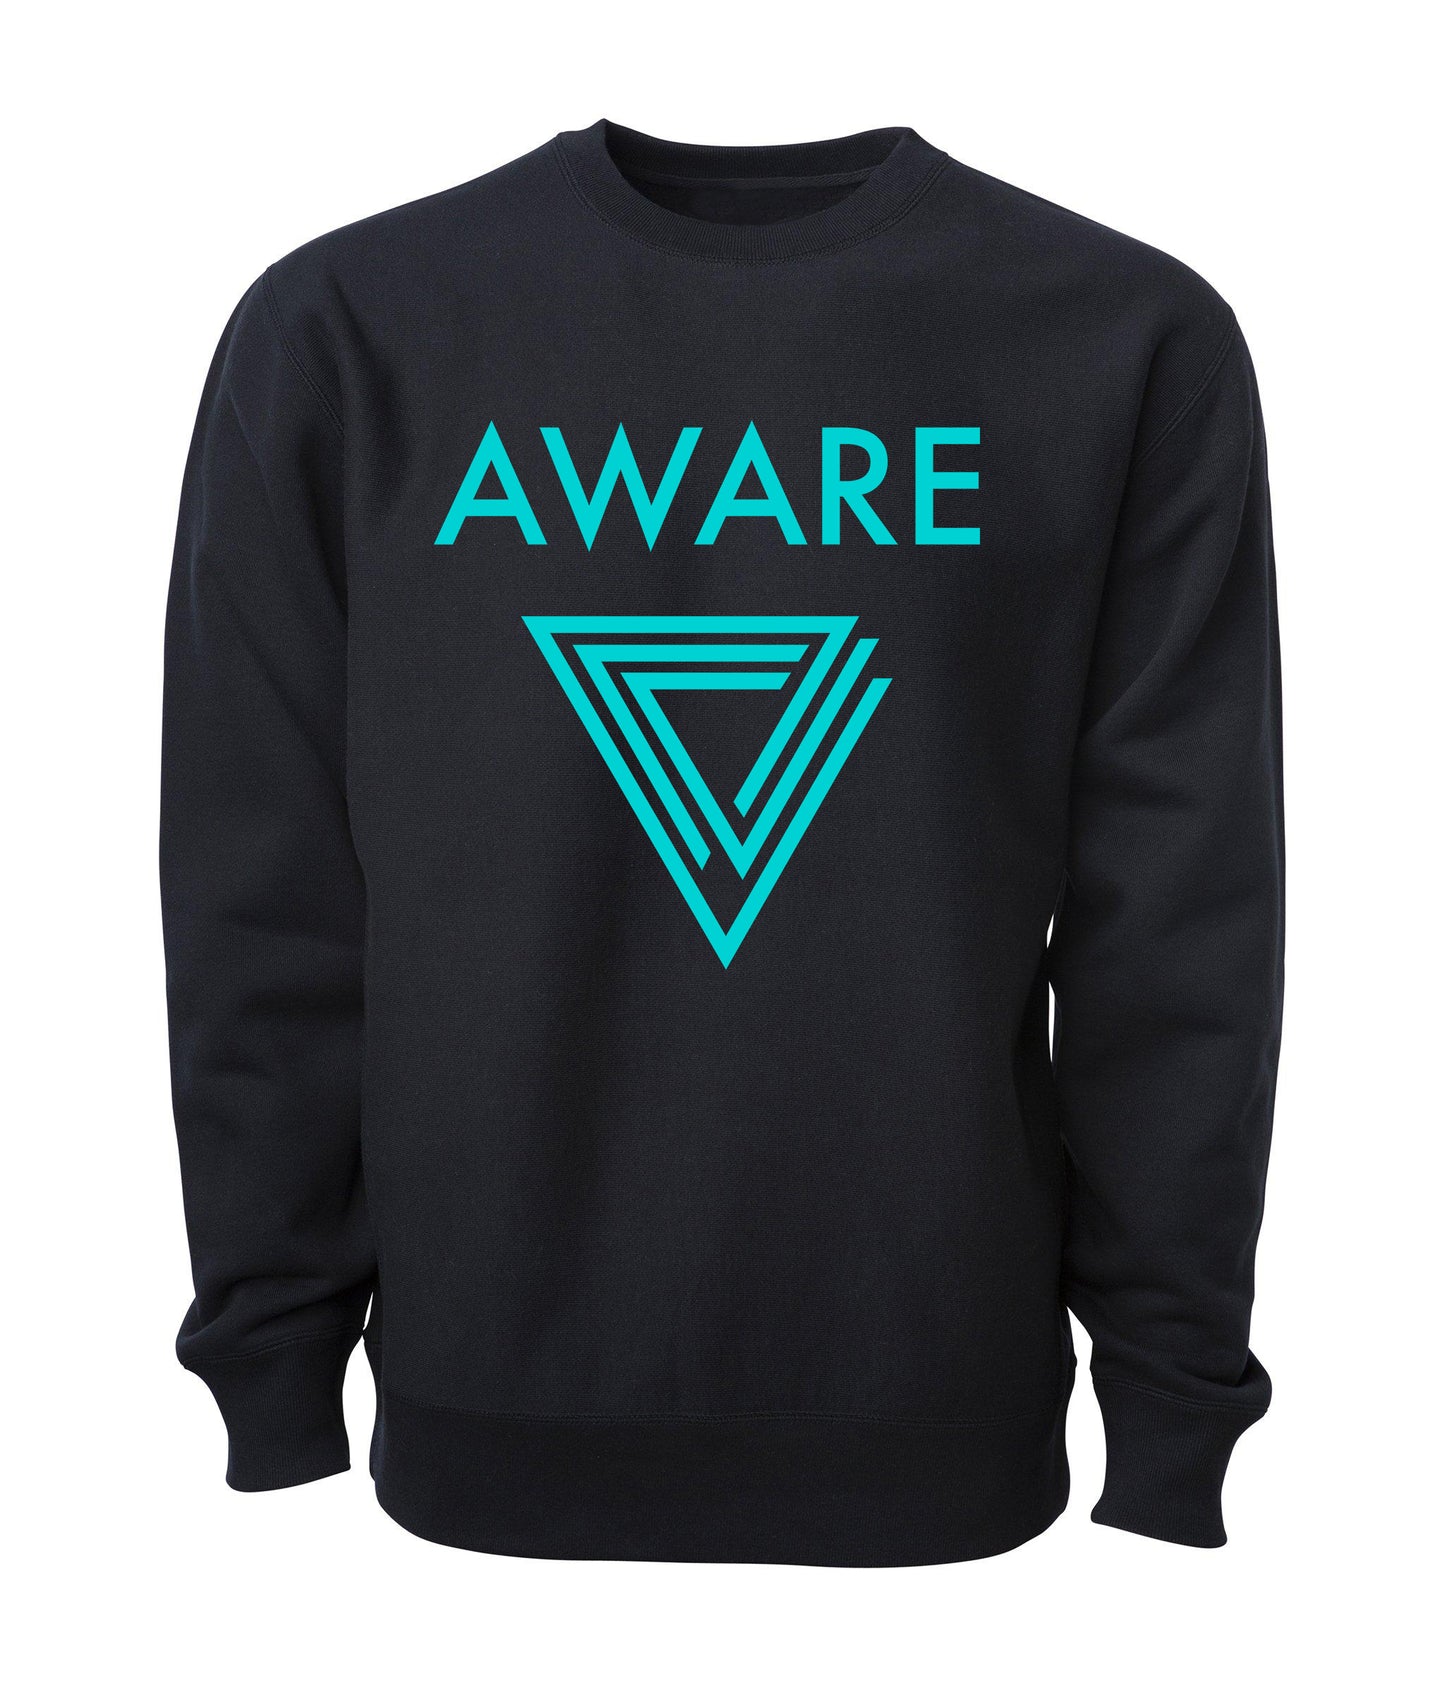 Teal AWARE Infinite Triangle Sweater